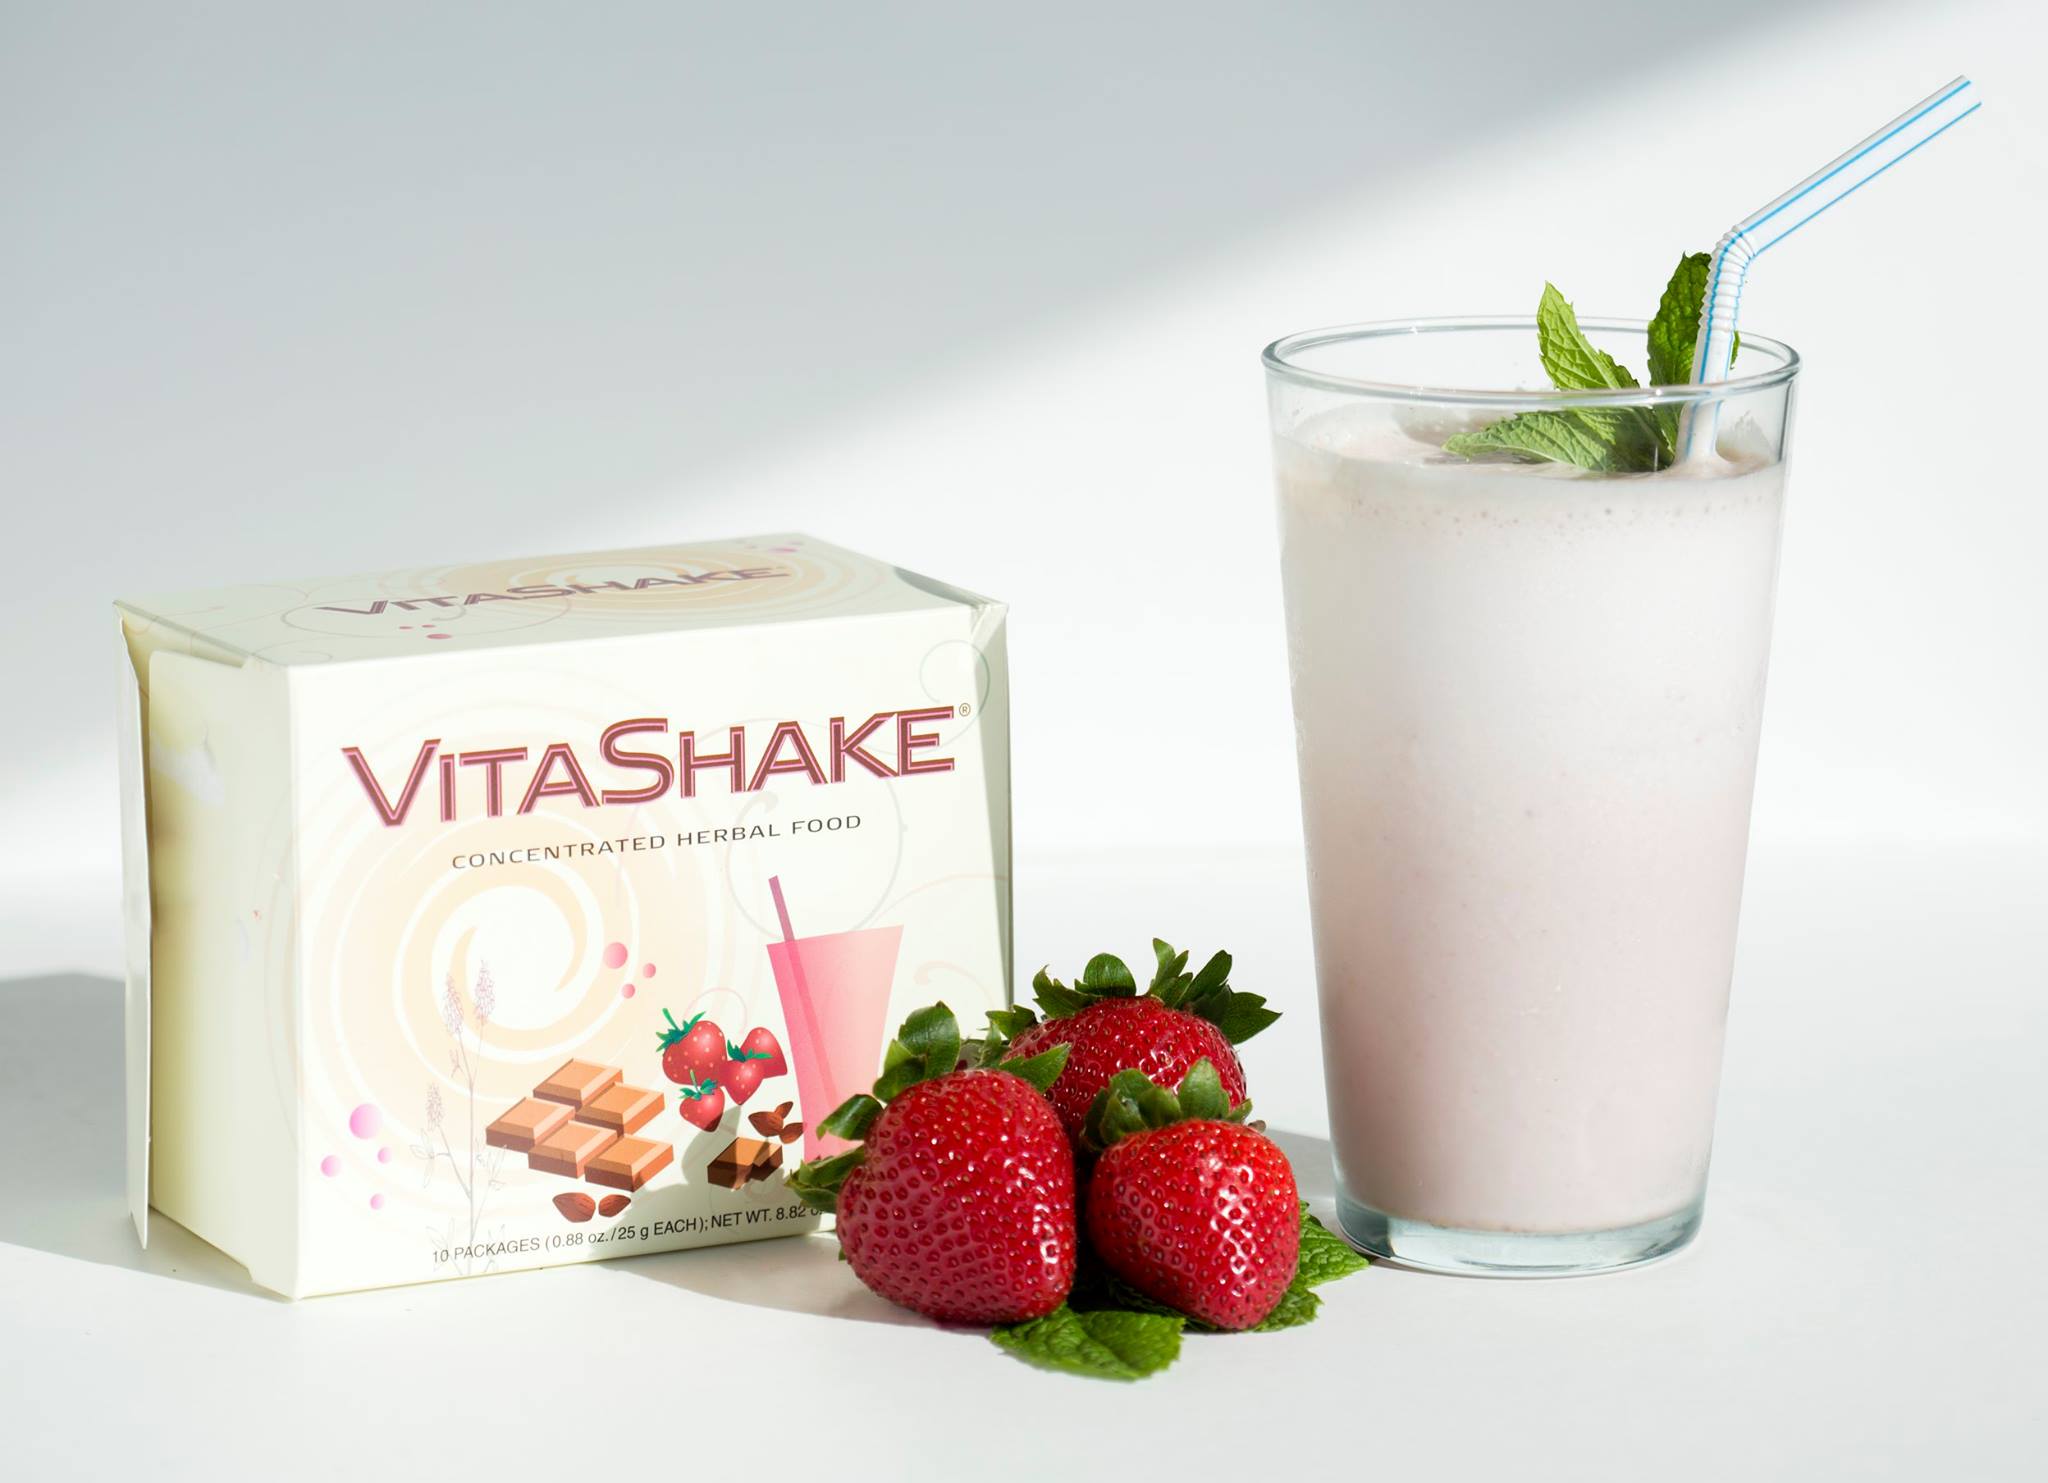 Sunrider VitaShake - Concentrated Herbal Food!